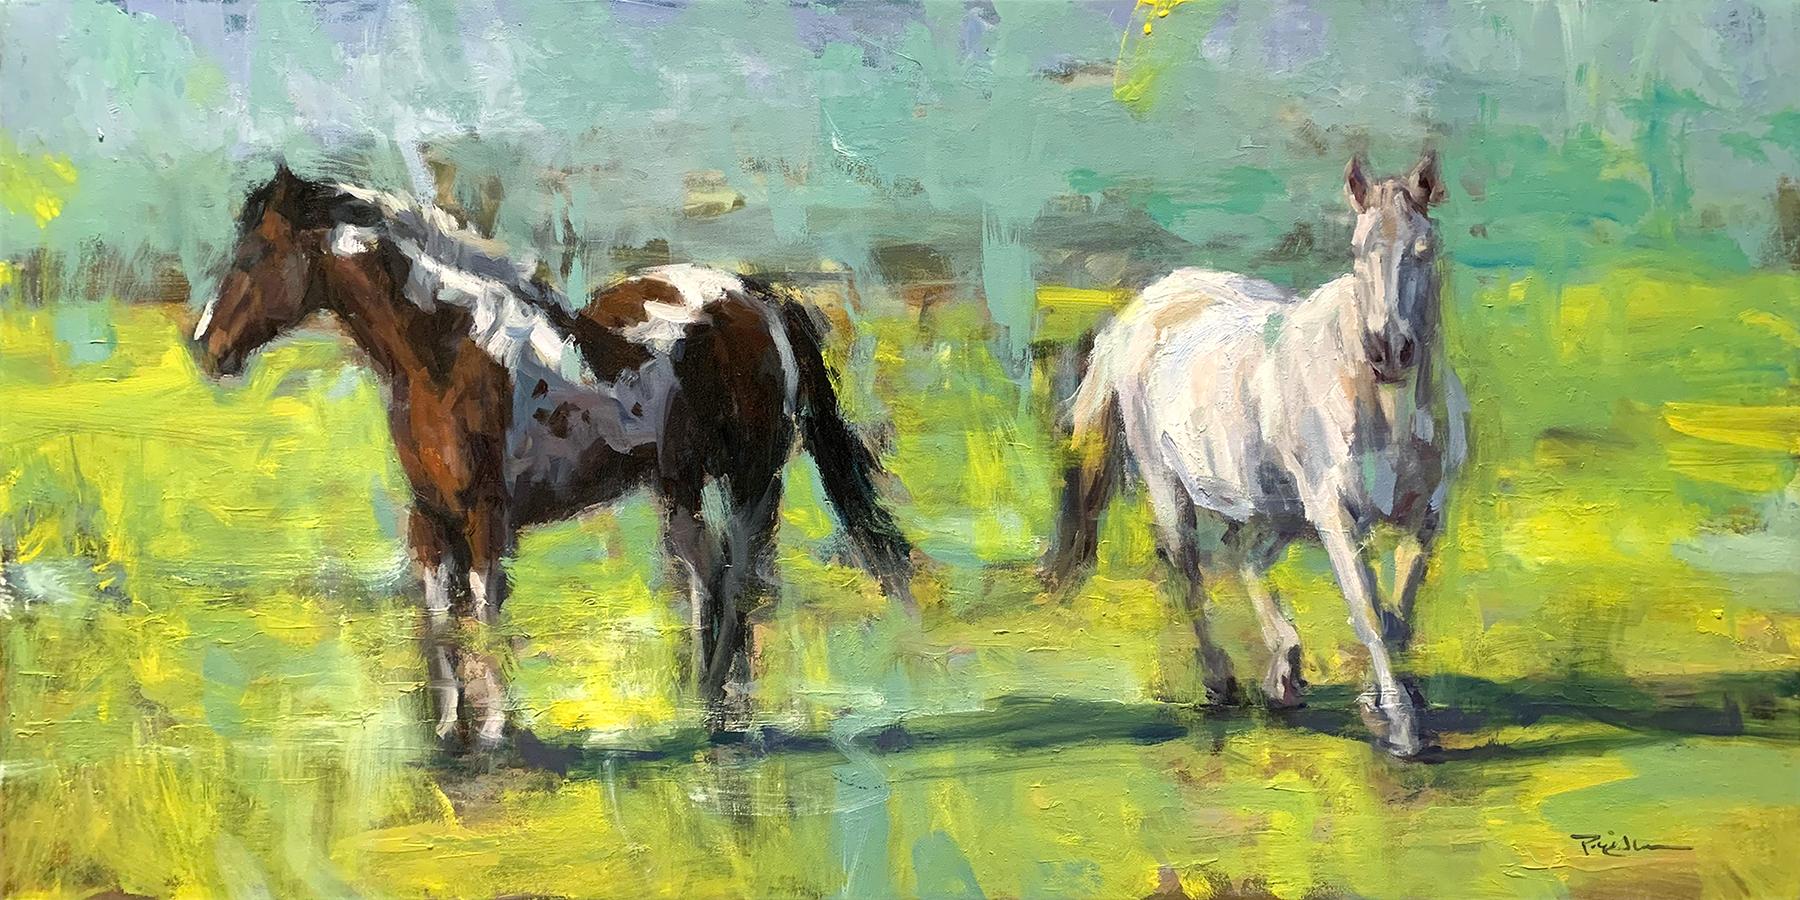 Pil Ho Lee Landscape Painting - "Utah Horses" Contemporary Impressionist Scene 